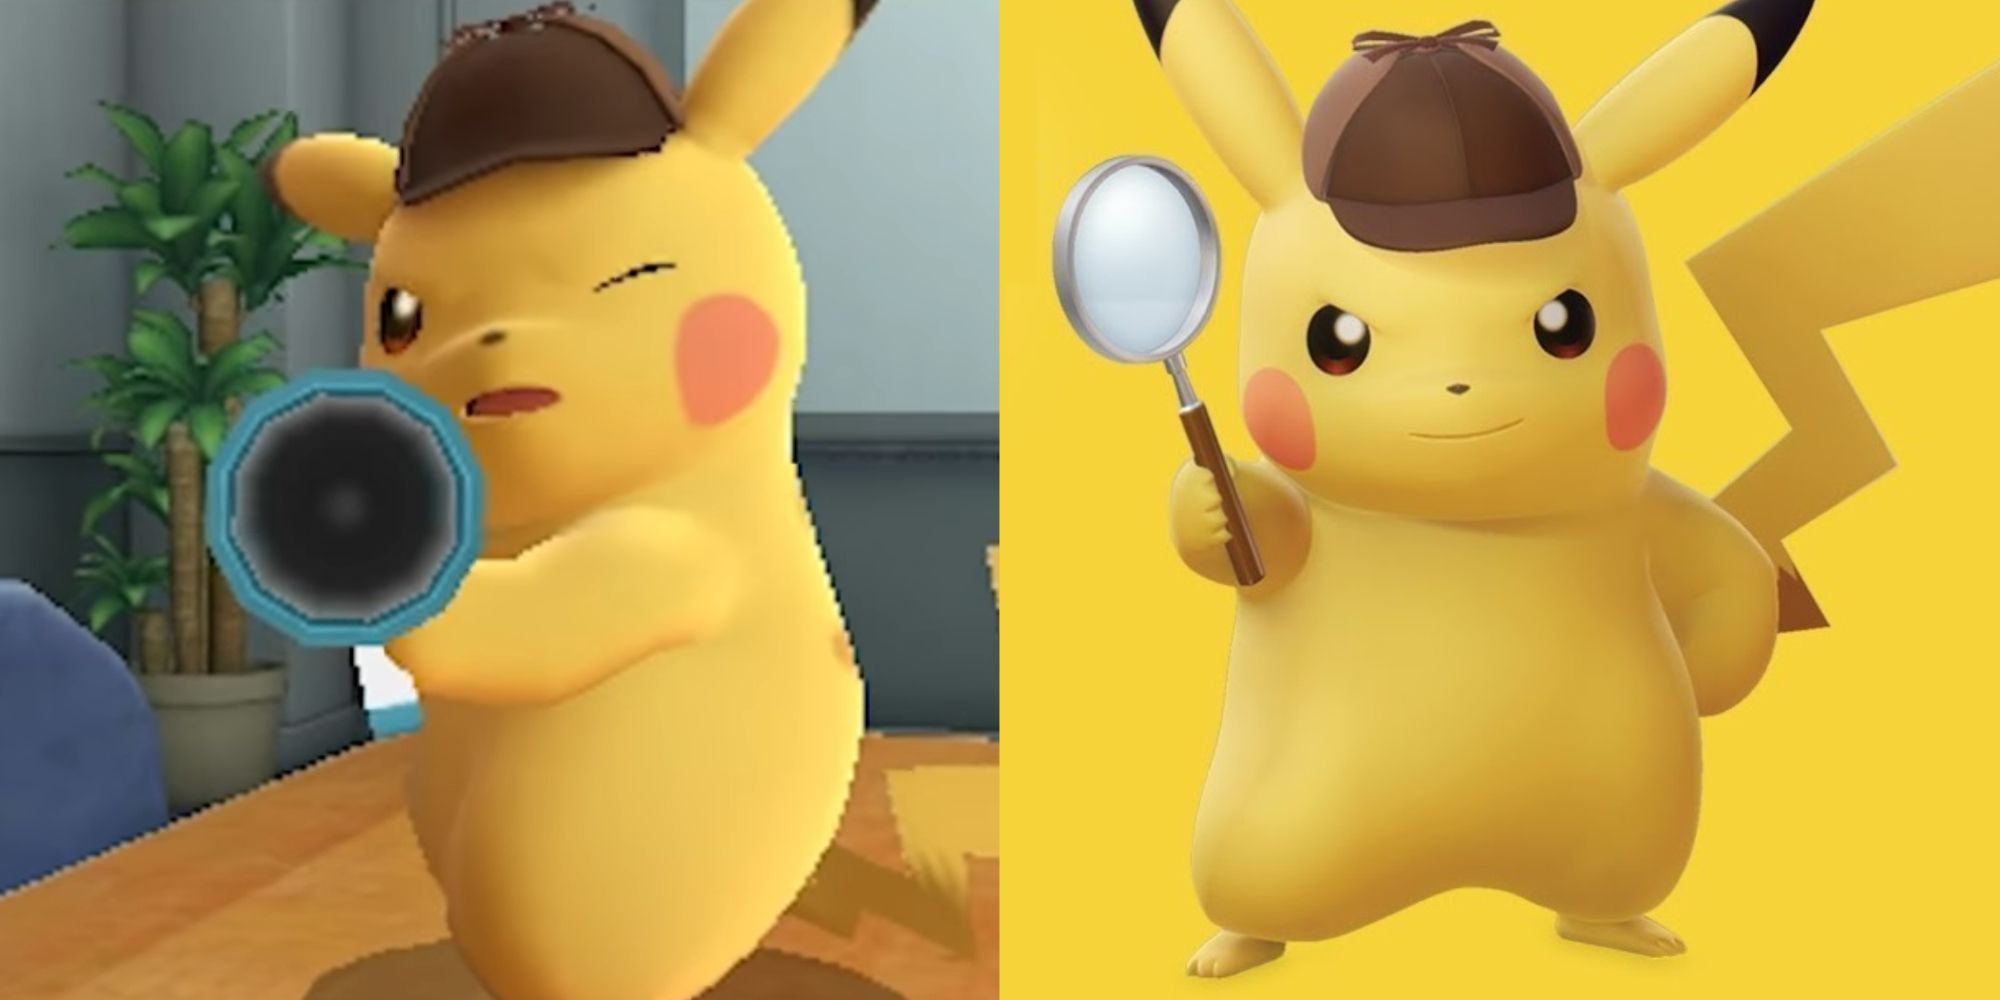 Detective Pikachu 2 Near Release, According To Job Profile